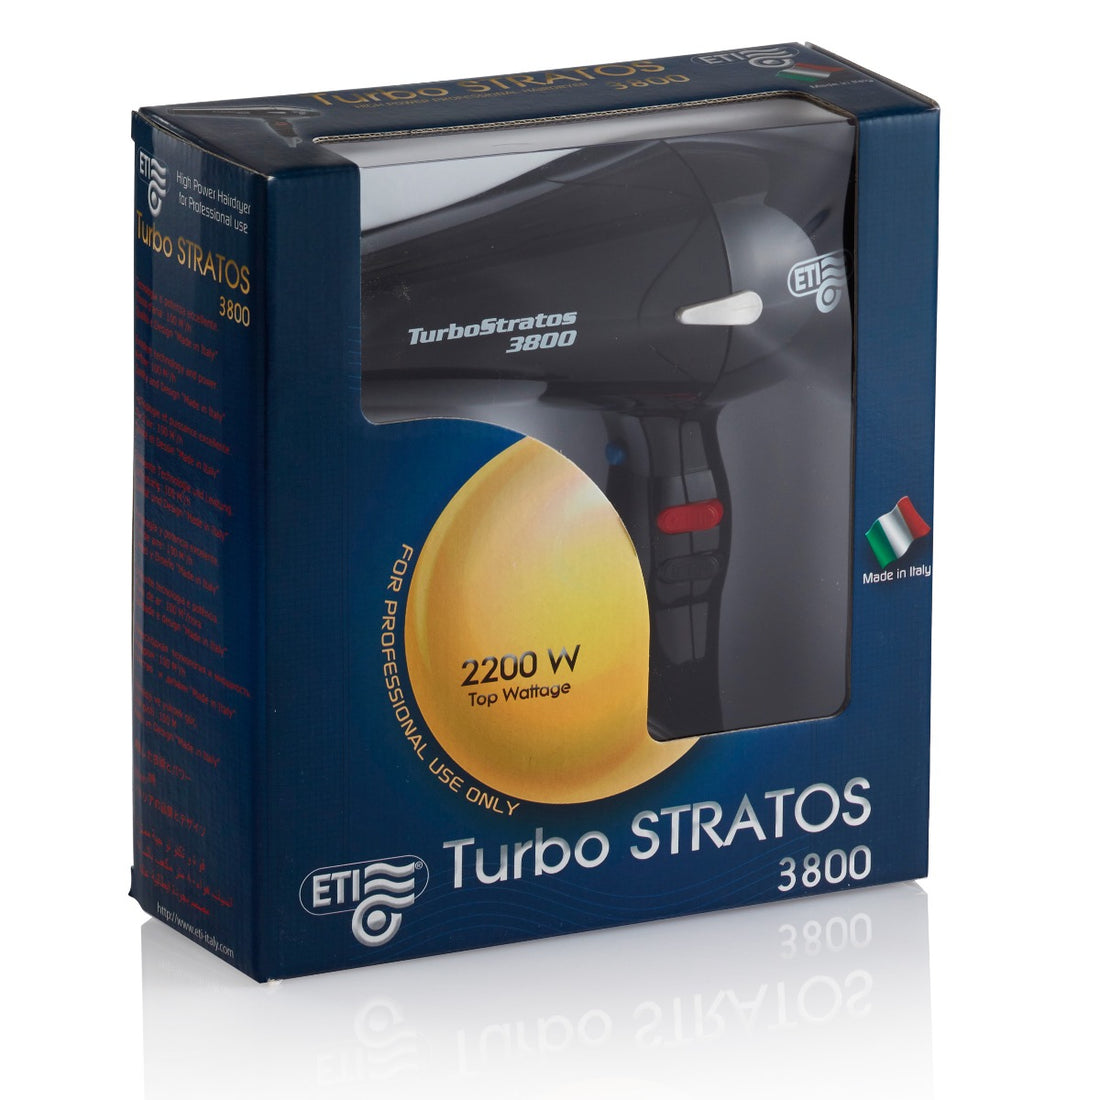 ETI Turbo Stratus 3800 Hairdryer Black